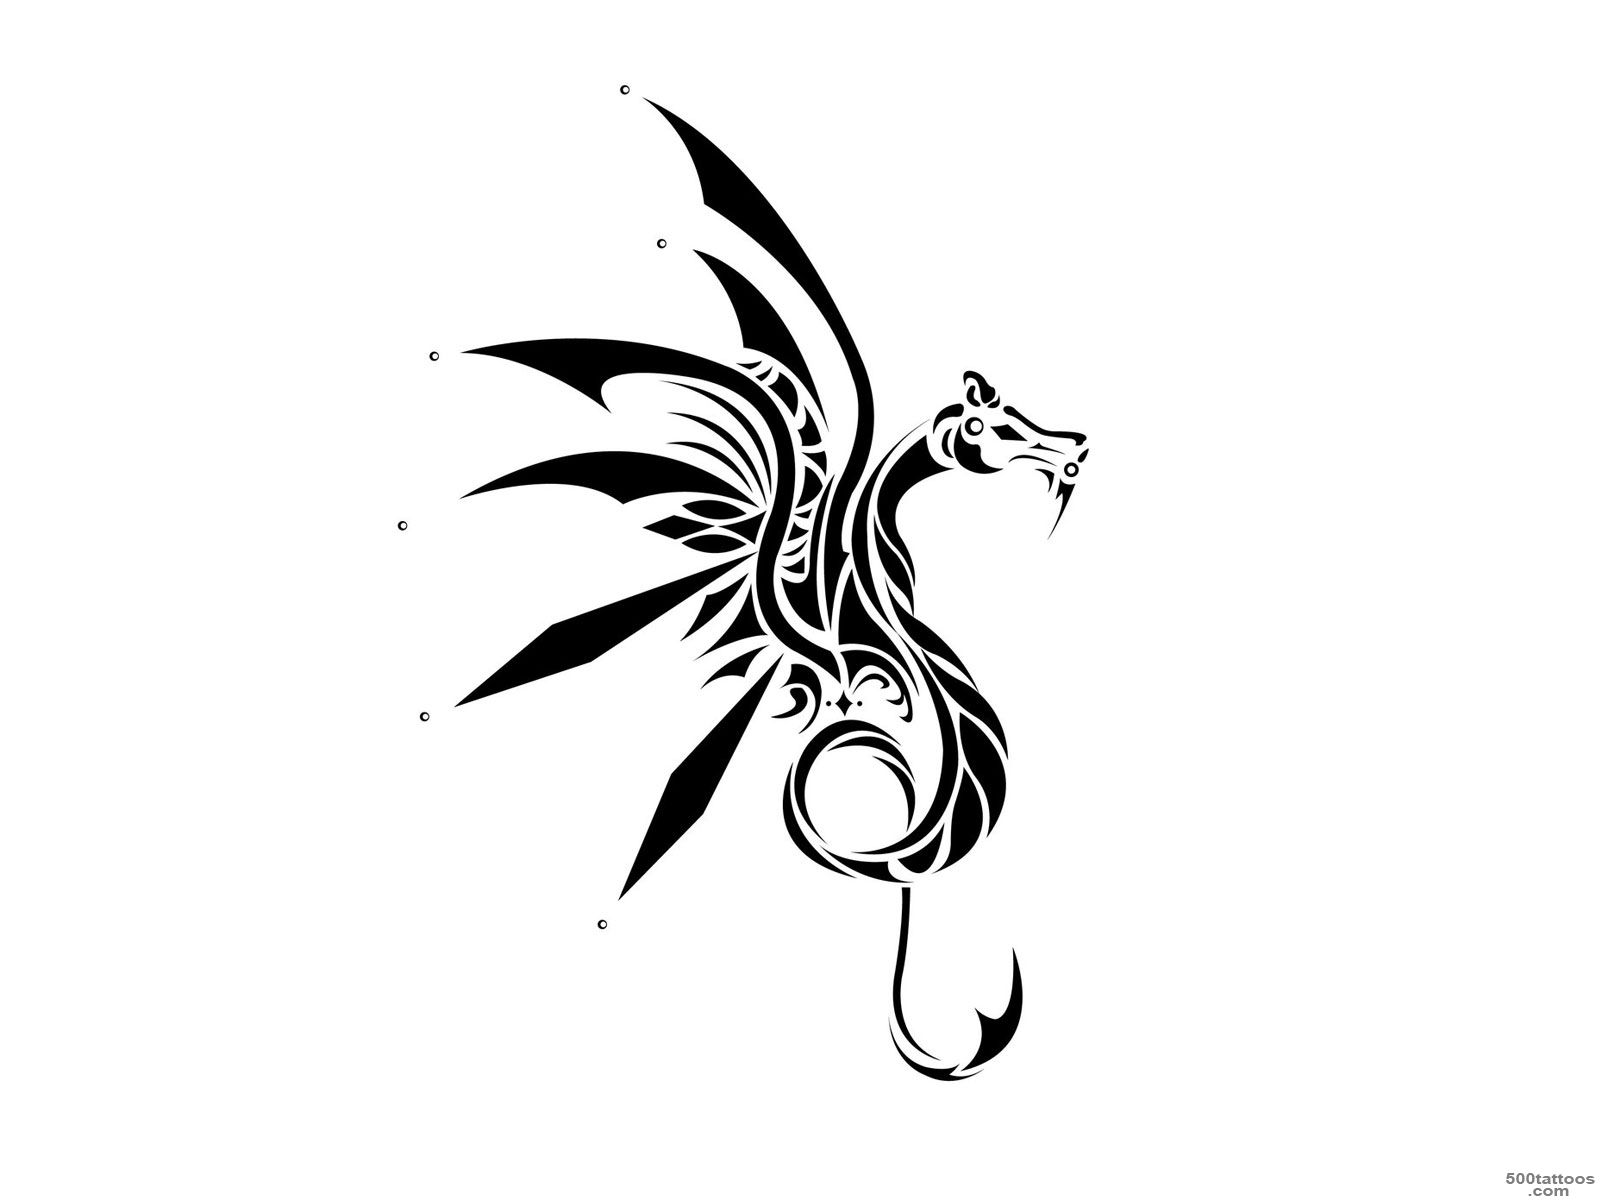 Find Marvelous Tribal Tattoo Designs Dragon Phoenix picture bBJF ..._48